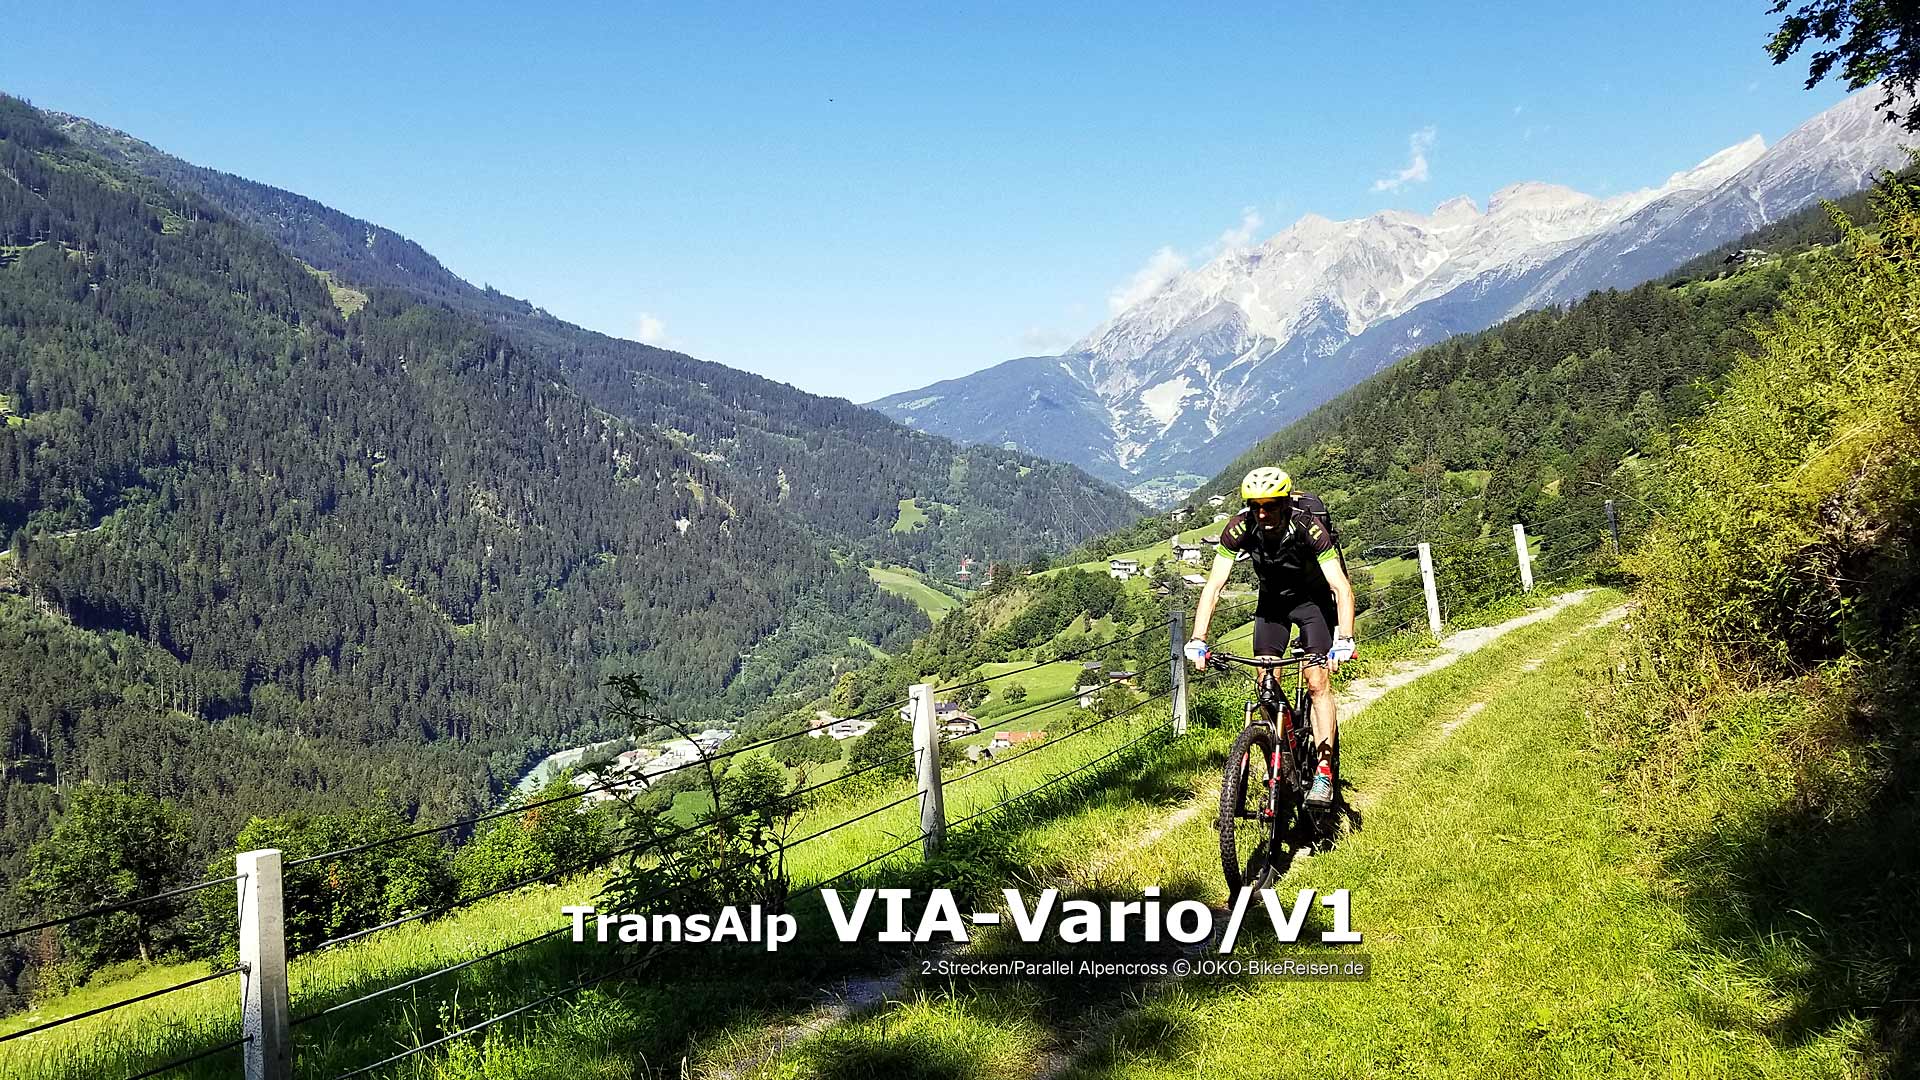 2-Level Kombi MTB-Alpencross für Kumpels/Gruppen/Pärchen (eBike) zum Gardasee/Riva